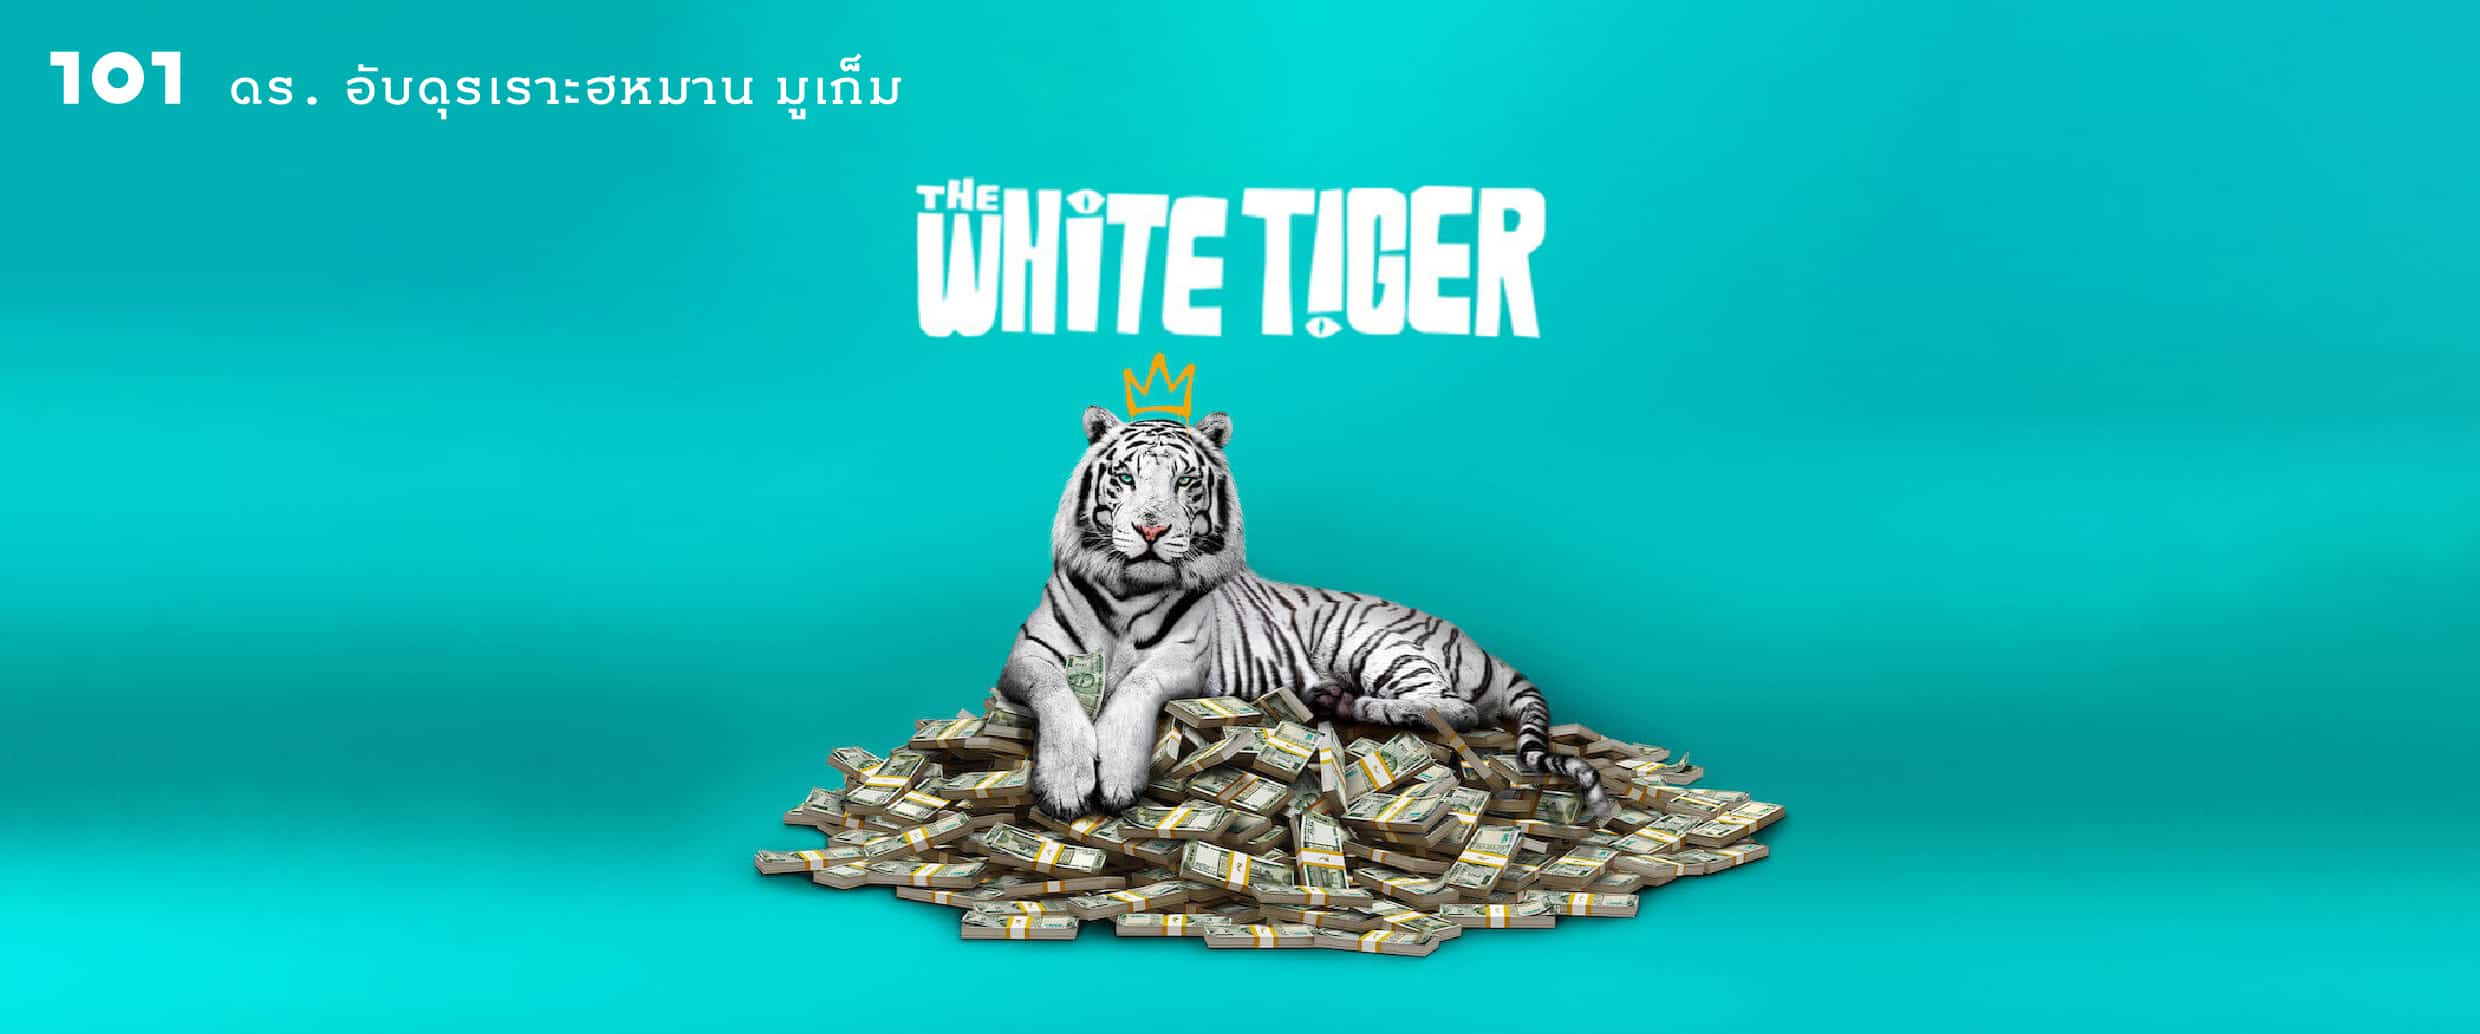 The White Tiger: เสือขาวในป่าใหญ่กับฝูงไก่ในกรงขัง